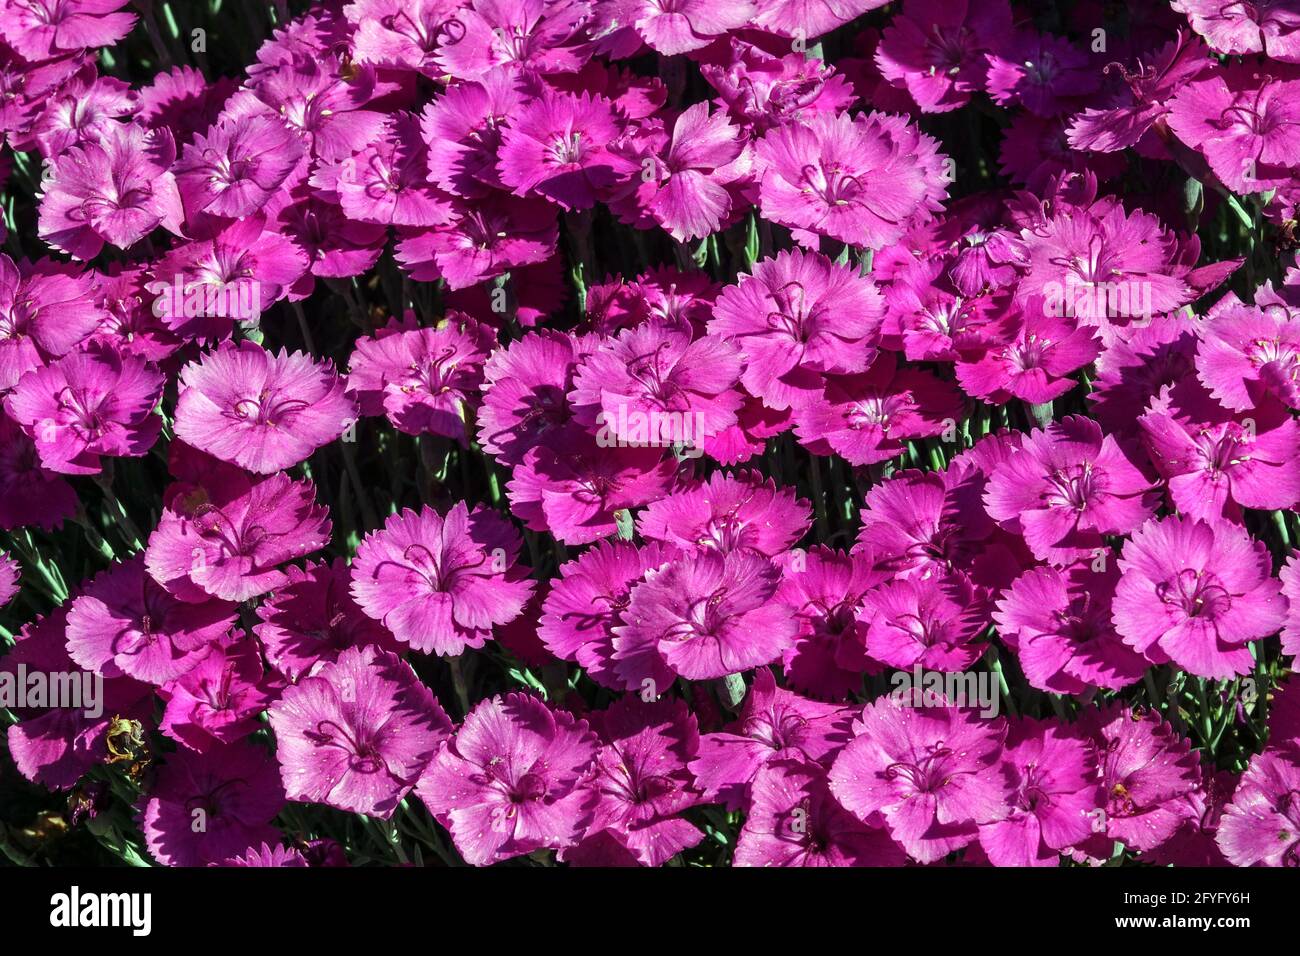 Dianthus gratianopolitanus ausdauernde üppig duftende tiefrosa Blüten Dianthus 'Whatfield Magenta' blühende Blüte Tiny Blooming Rockery Pflanze Stockfoto